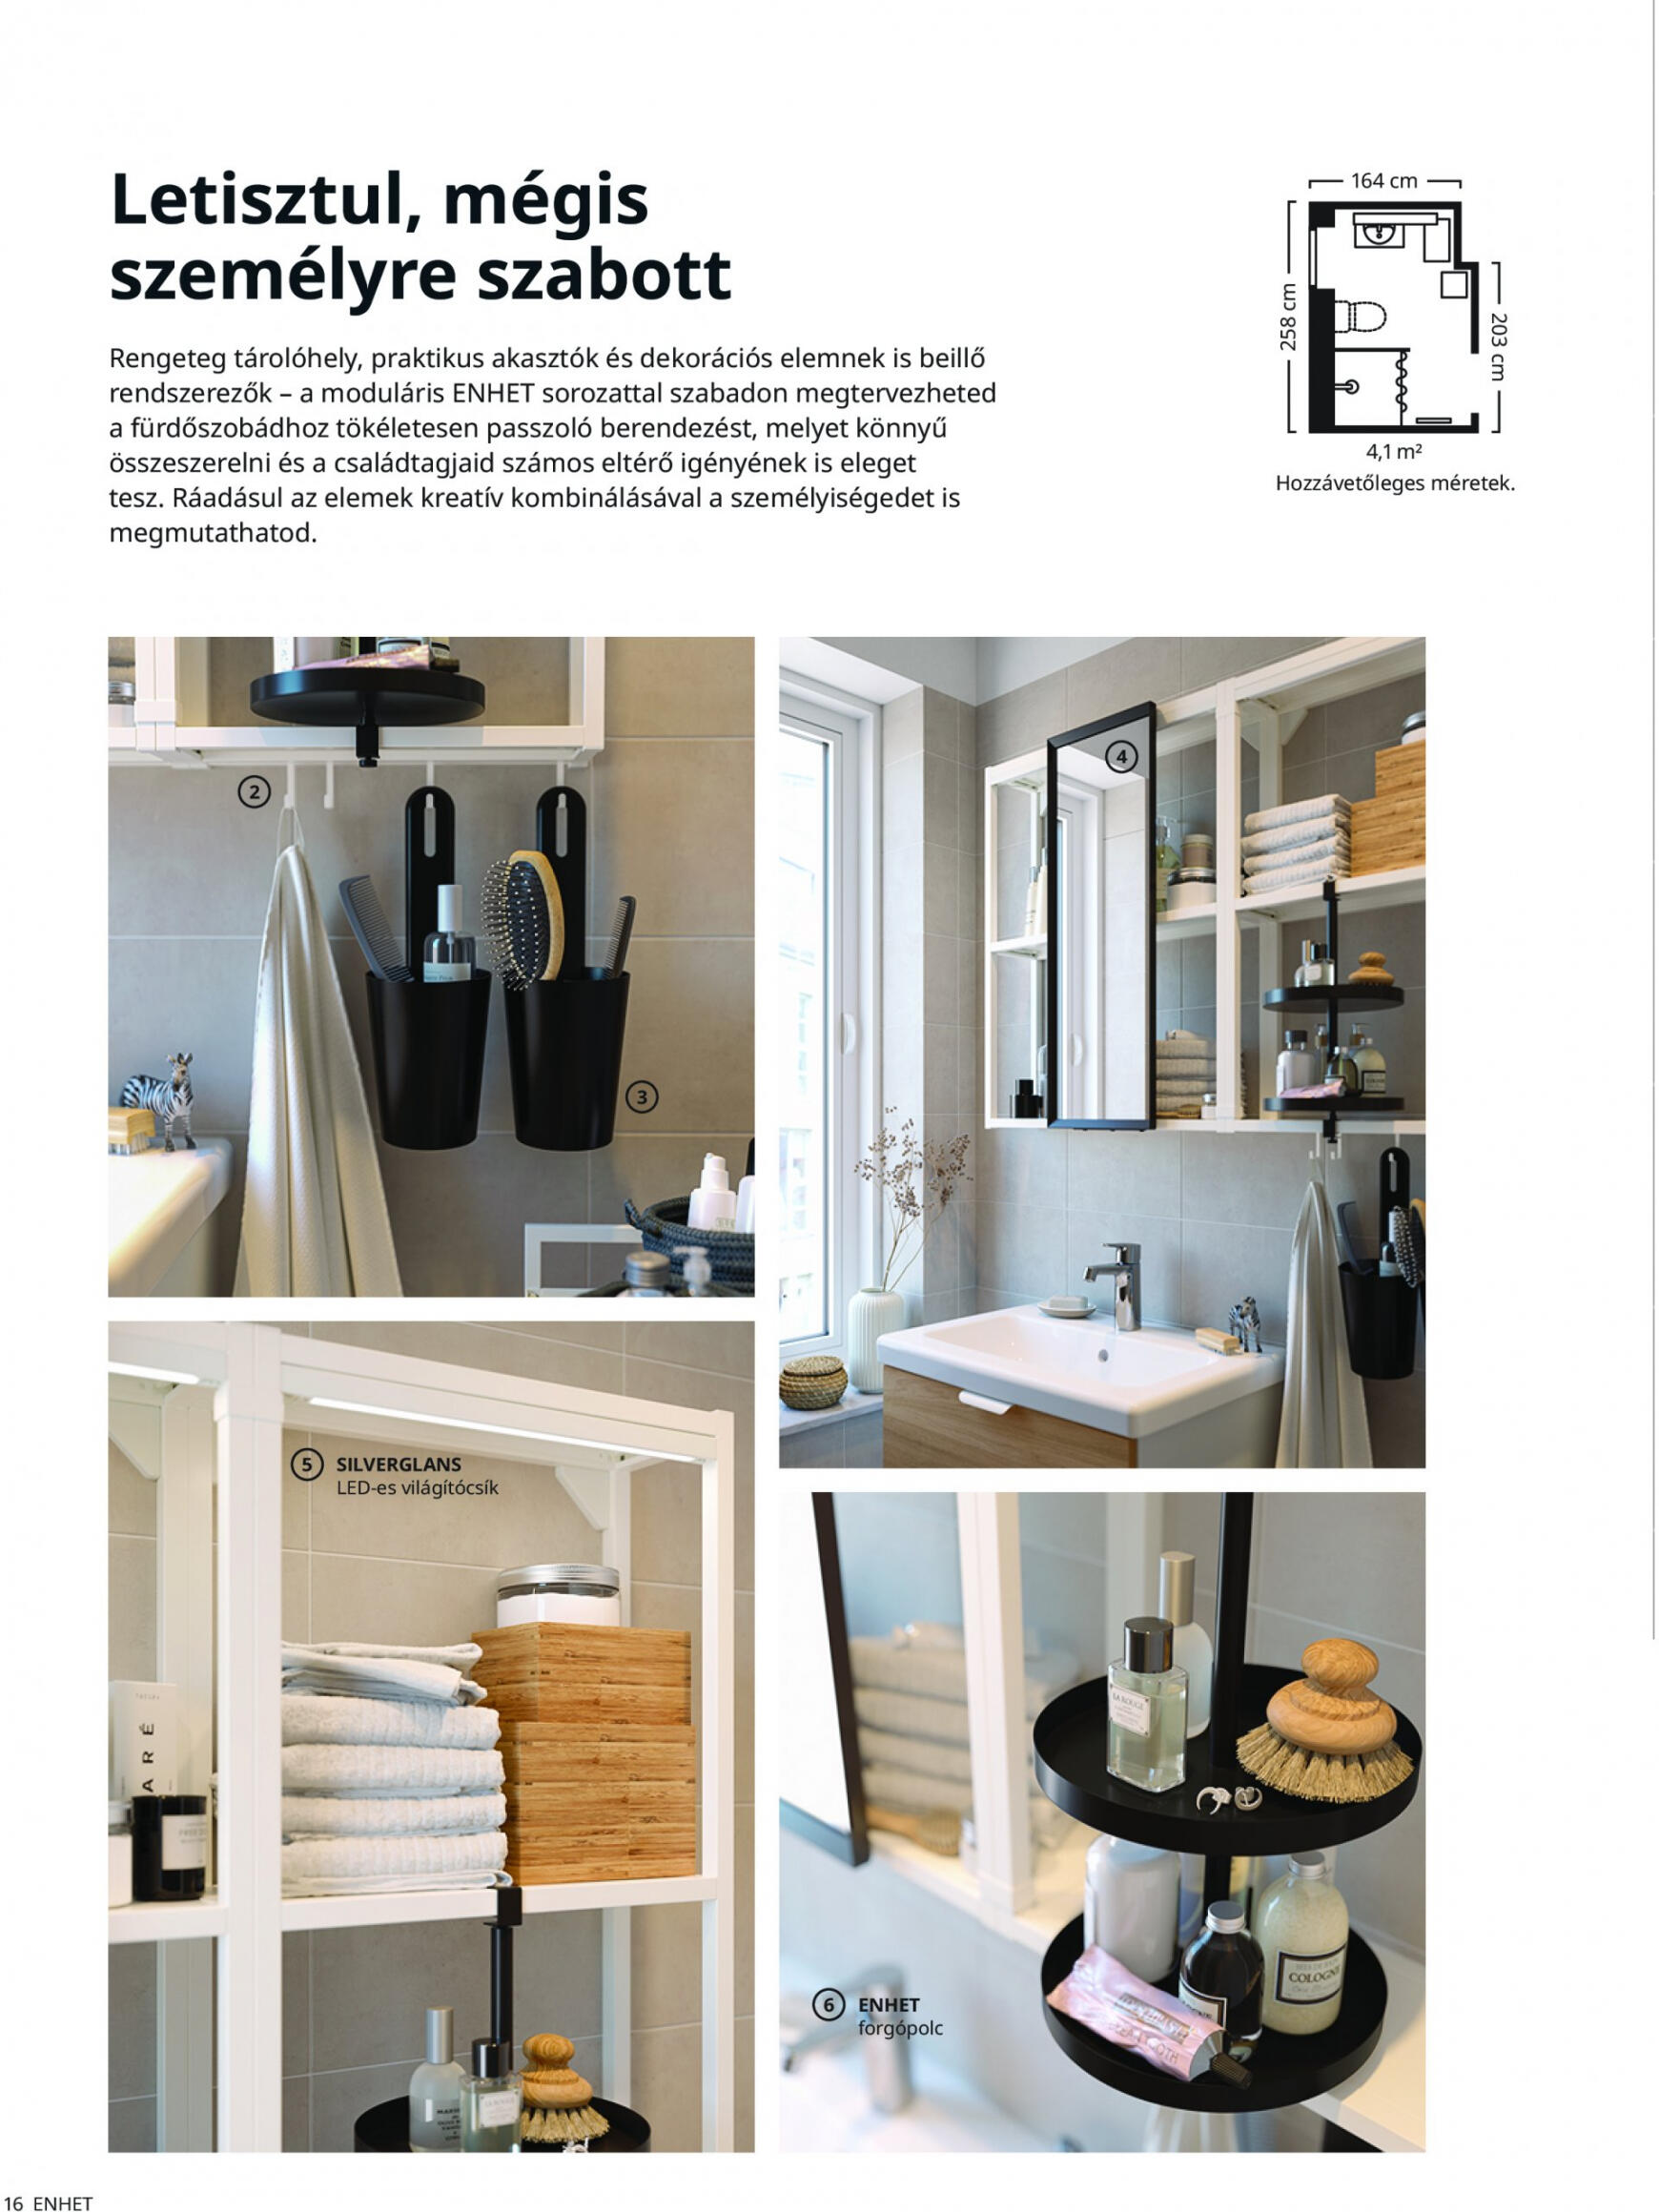 ikea - IKEA újság hétfőtől 09.26. - page: 16